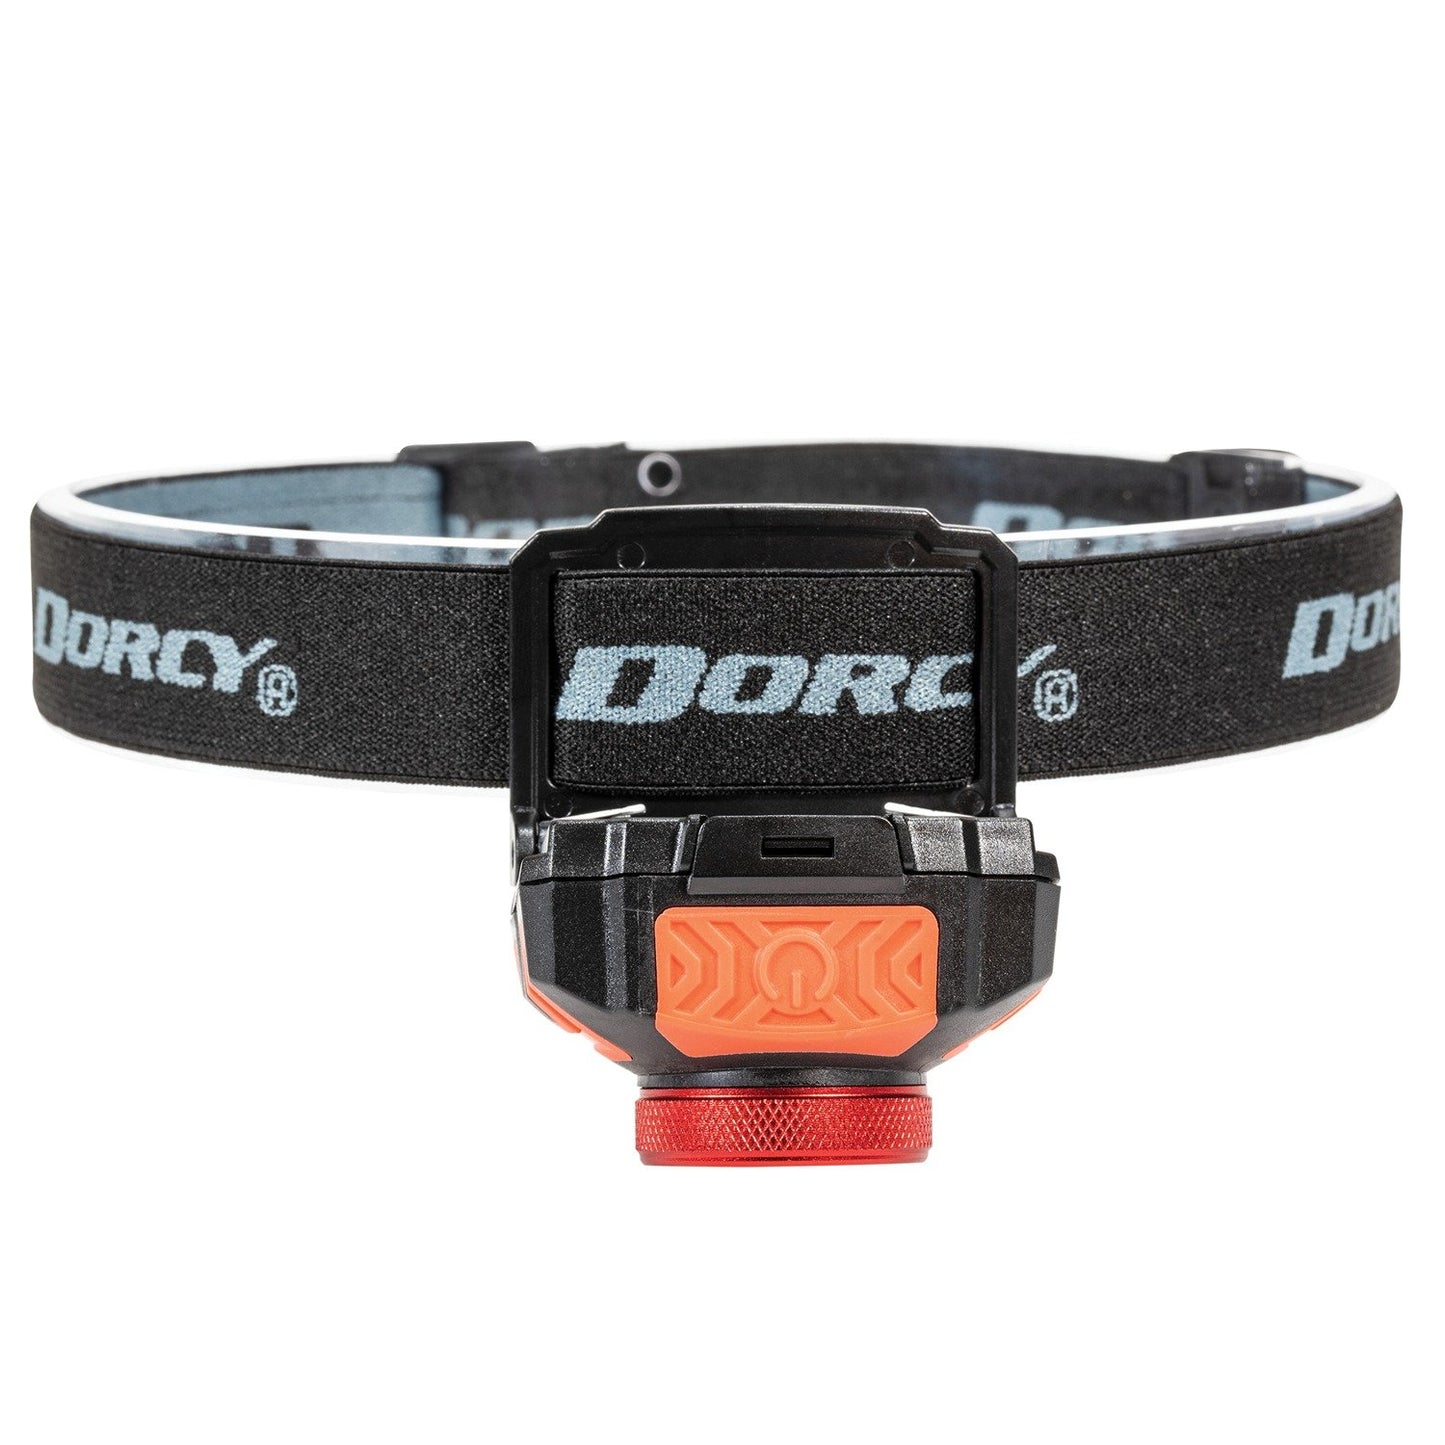 Dorcy 41-4335 Ultra HD 530-Lumen Headlamp and UV Light